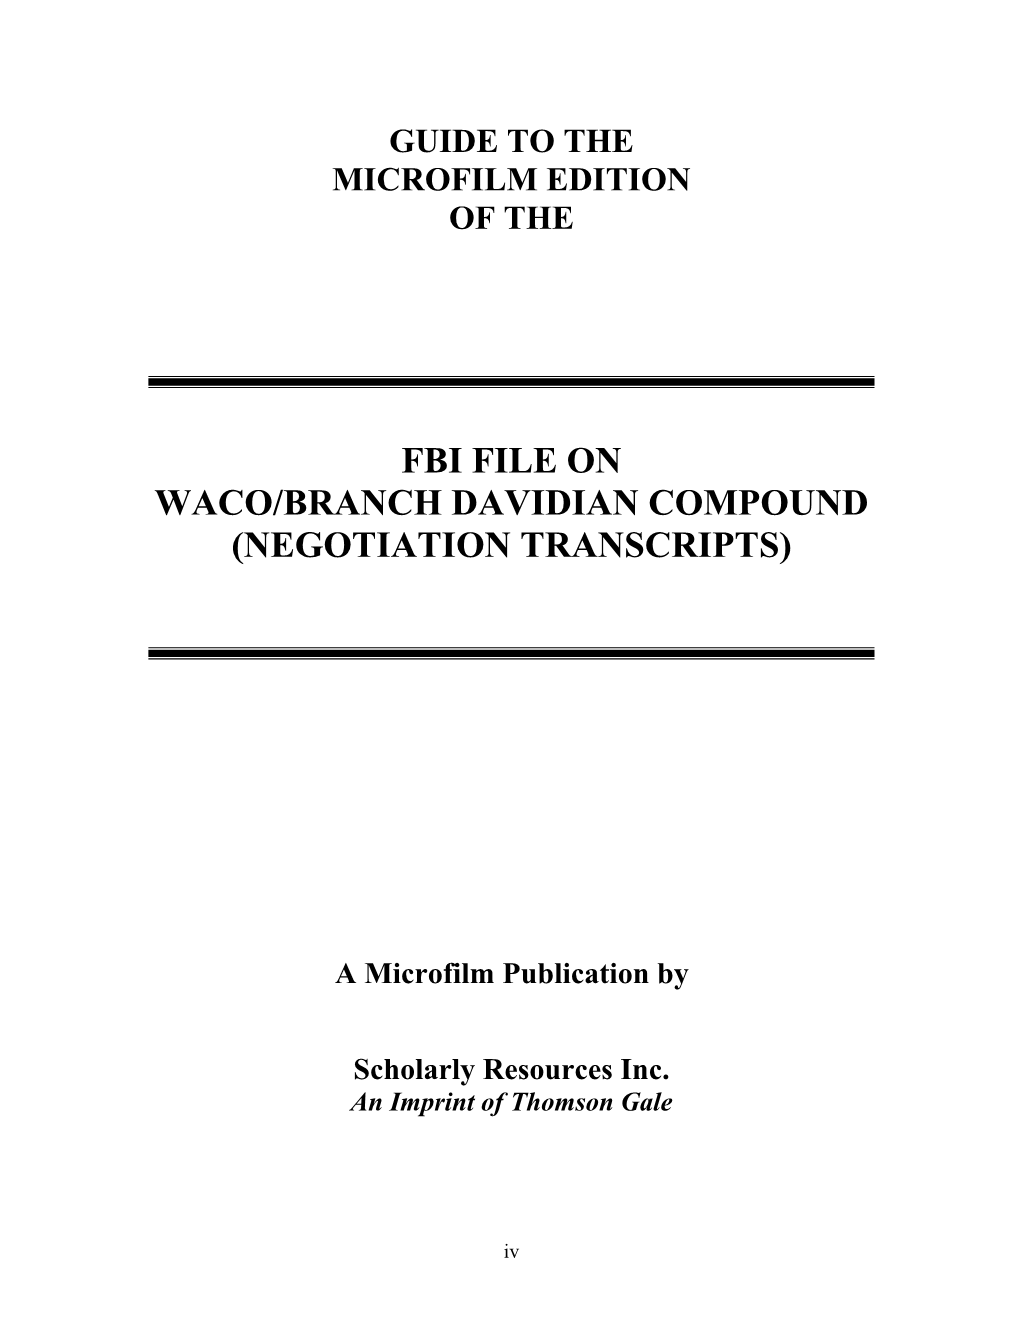 Fbi File on Waco/Branch Davidian Compound (Negotiation Transcripts)